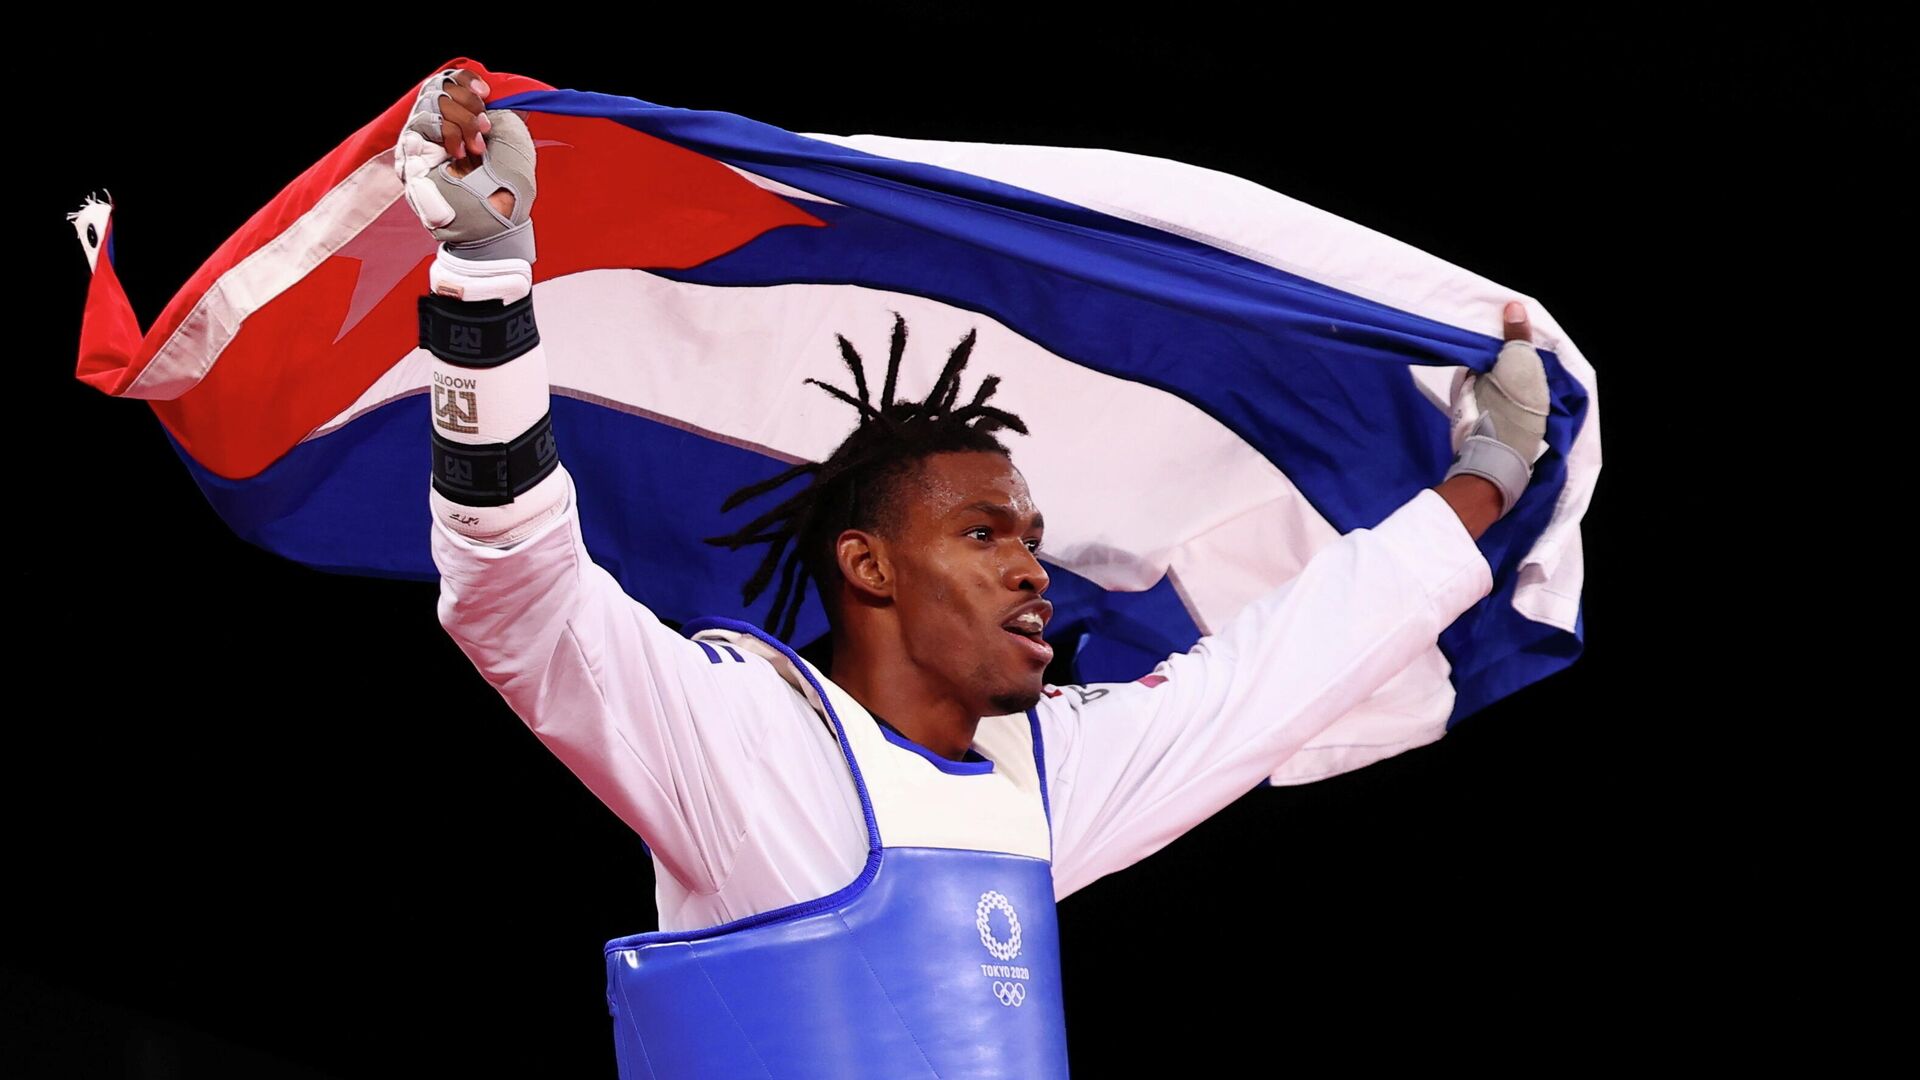 El deportista cubano Rafael Alba celebra su medalla de bronce - Sputnik Mundo, 1920, 30.07.2021